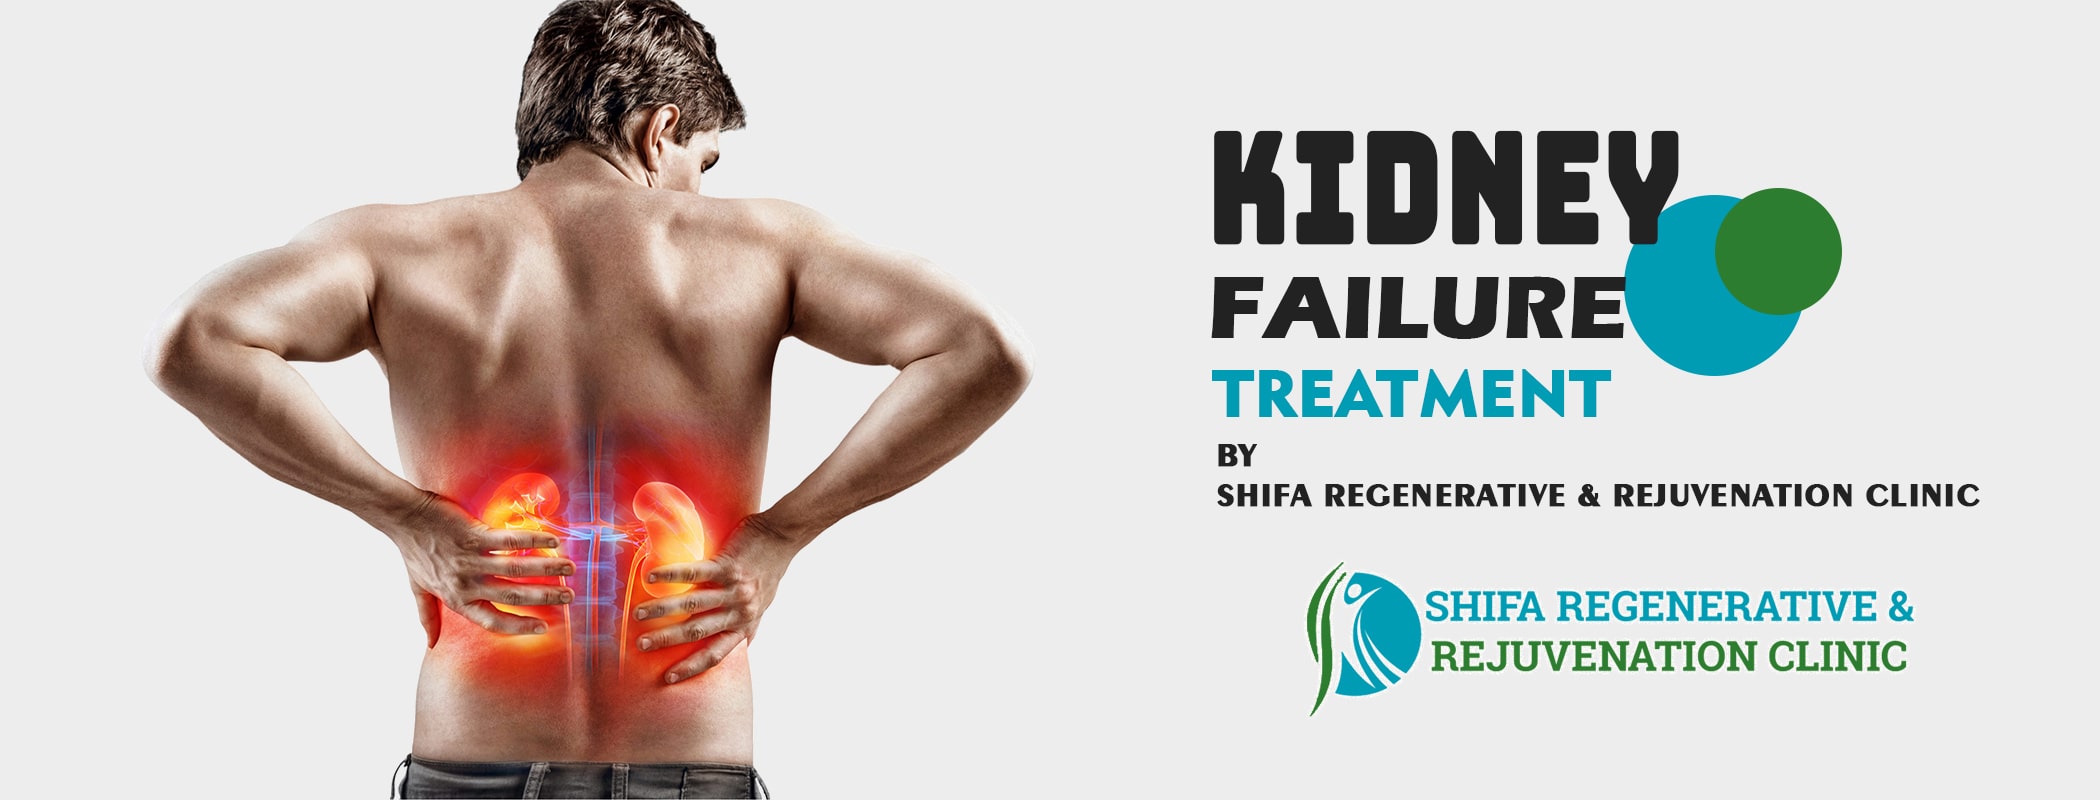 Regenerative Medicine Treatment for Kidney Failure or Acute Renal